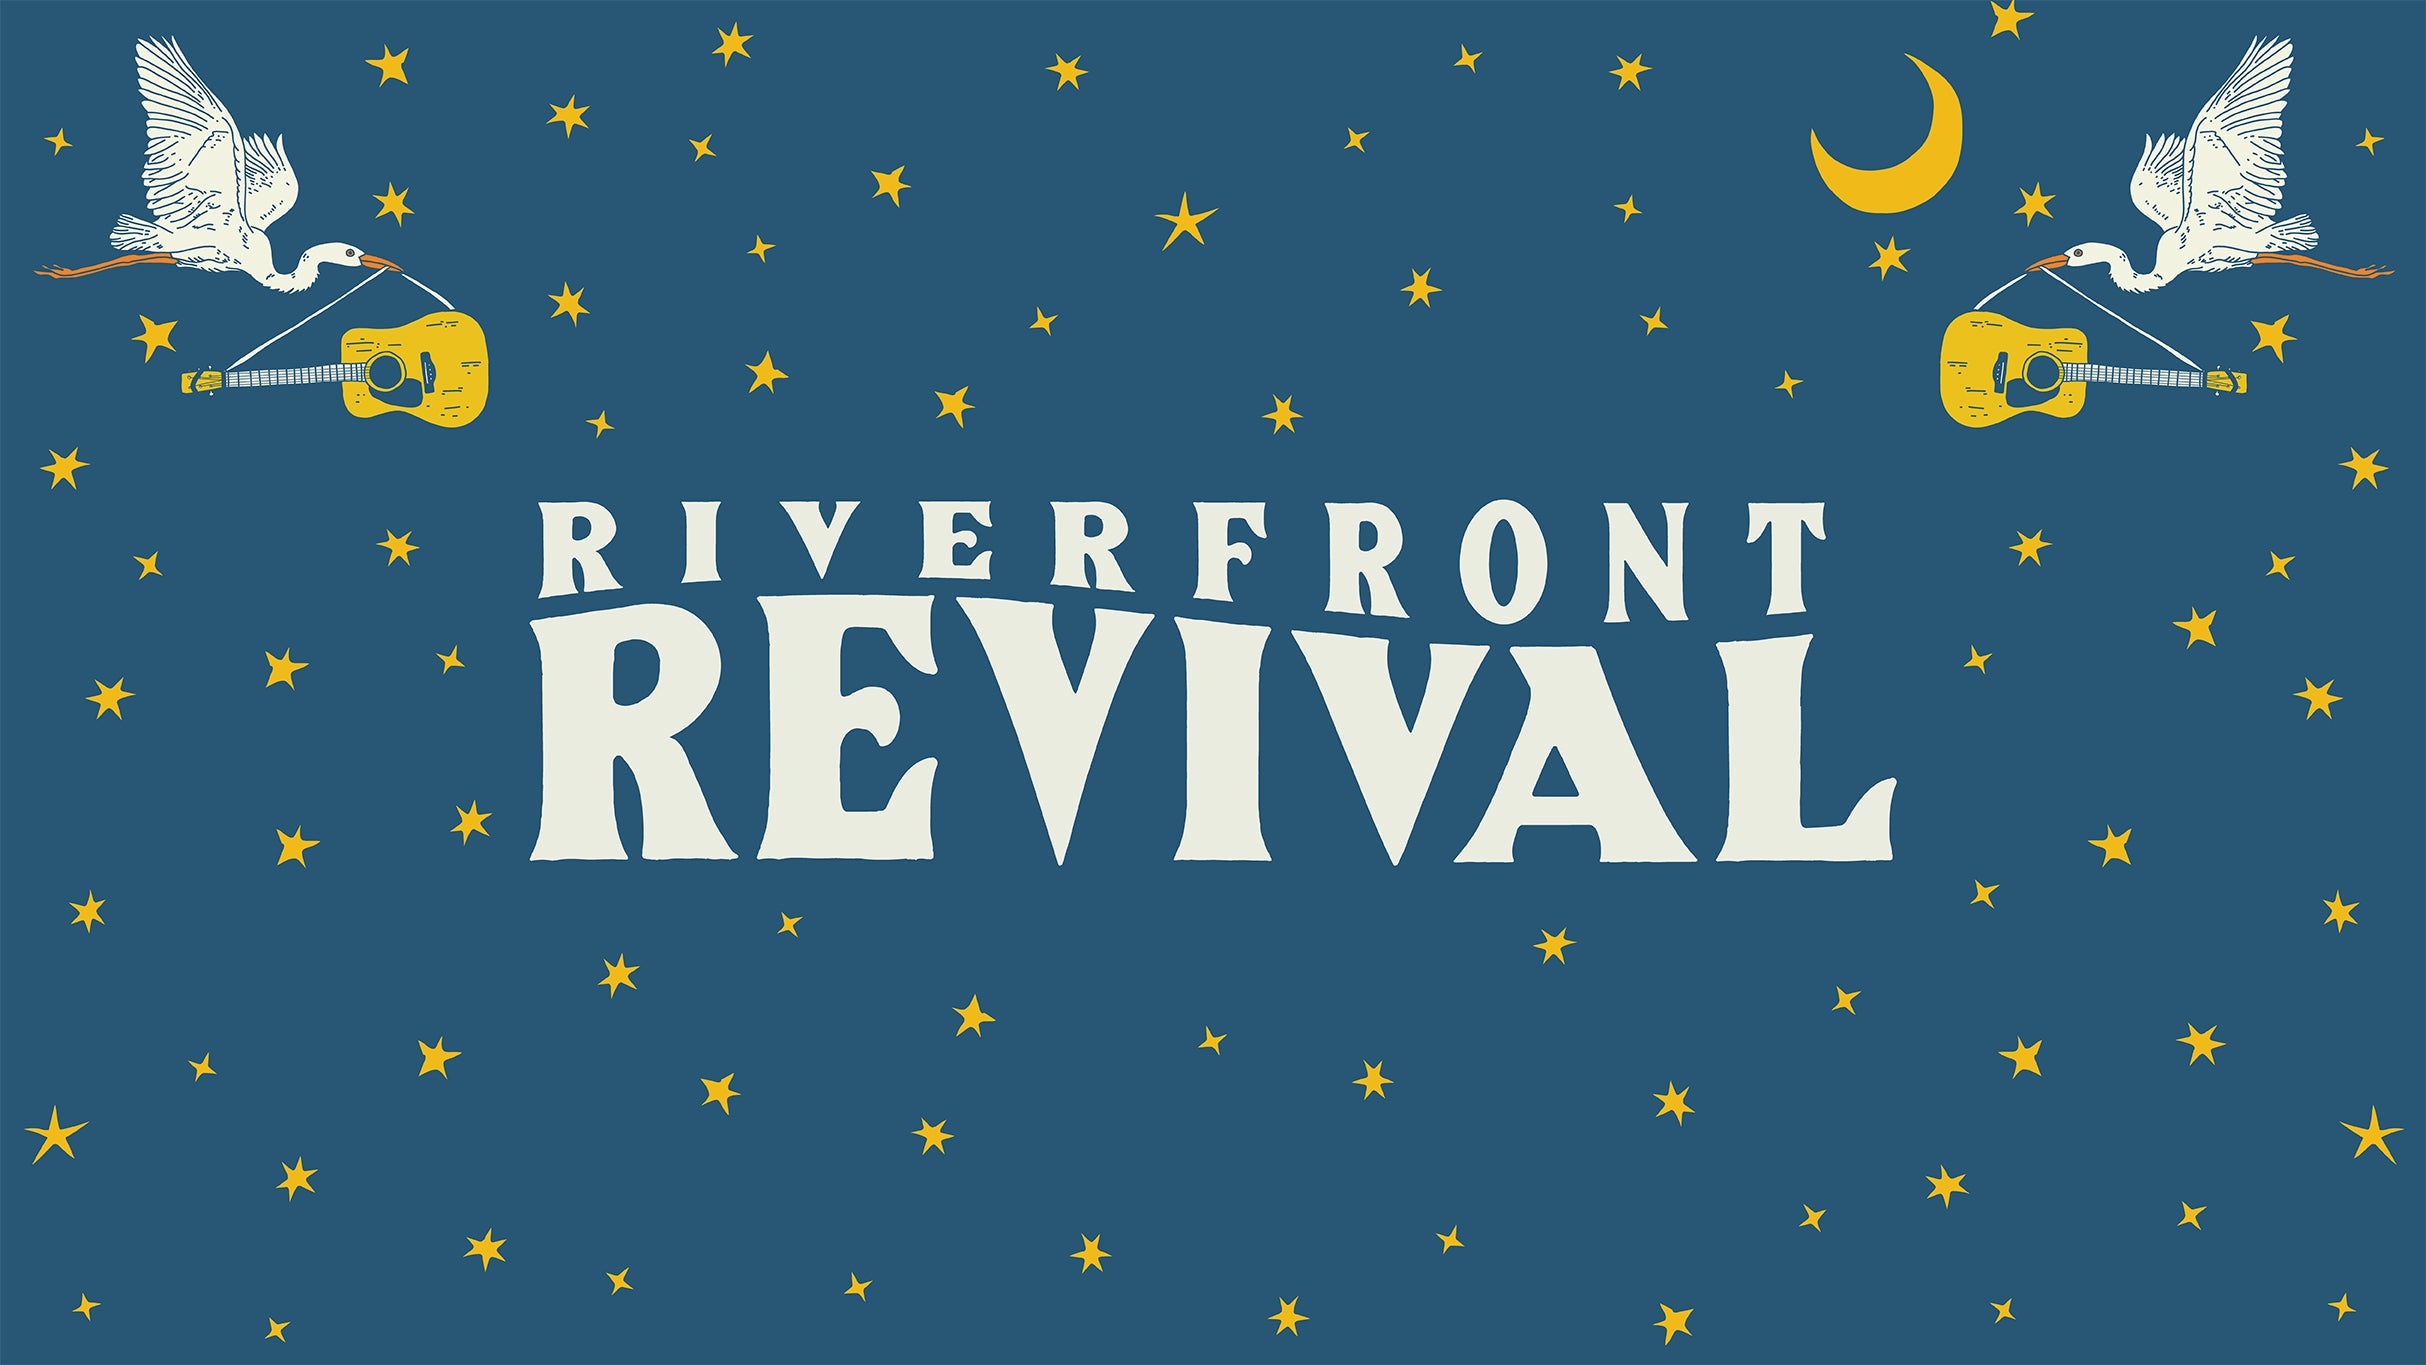 Riverfront Revival at Riverfront Park